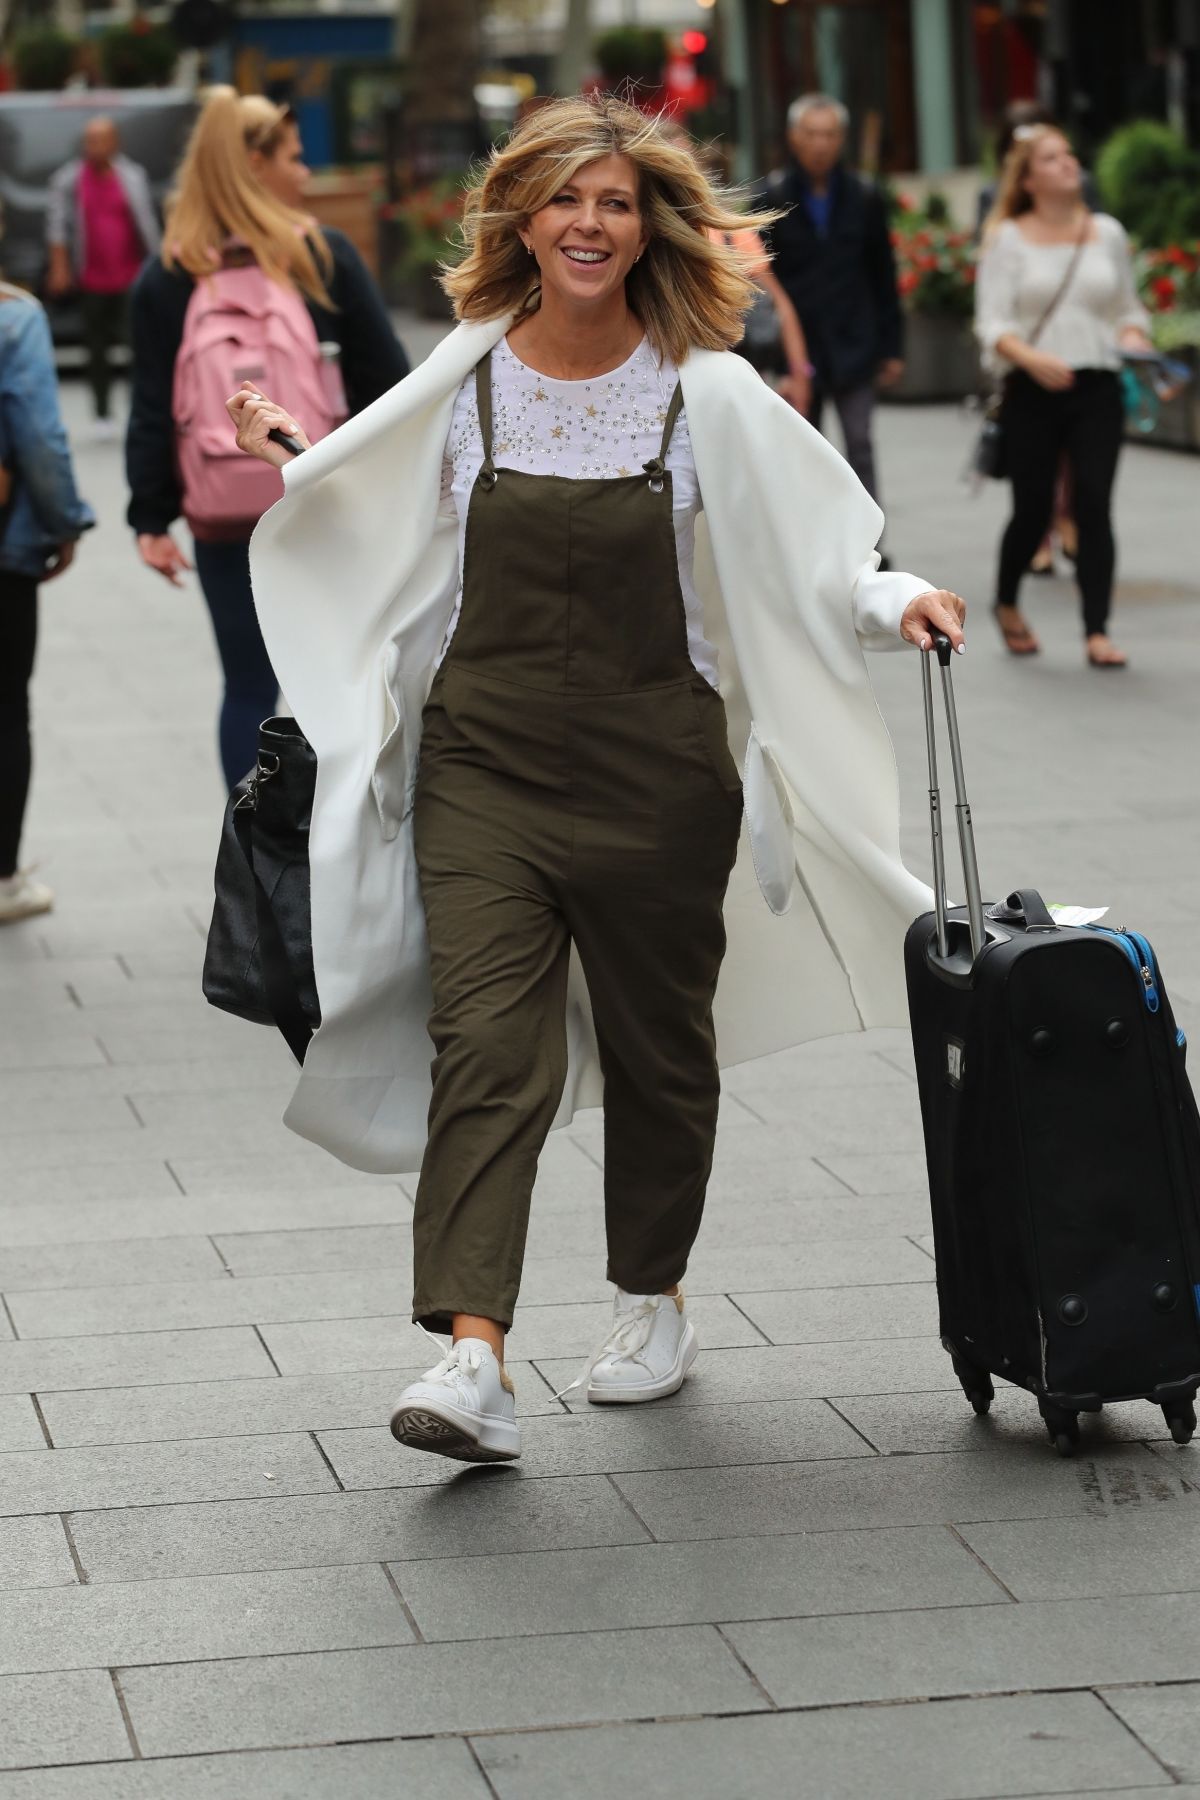 KATE GARRAWAY Arrives at Smooth Radio in London 09/12/2019 – HawtCelebs